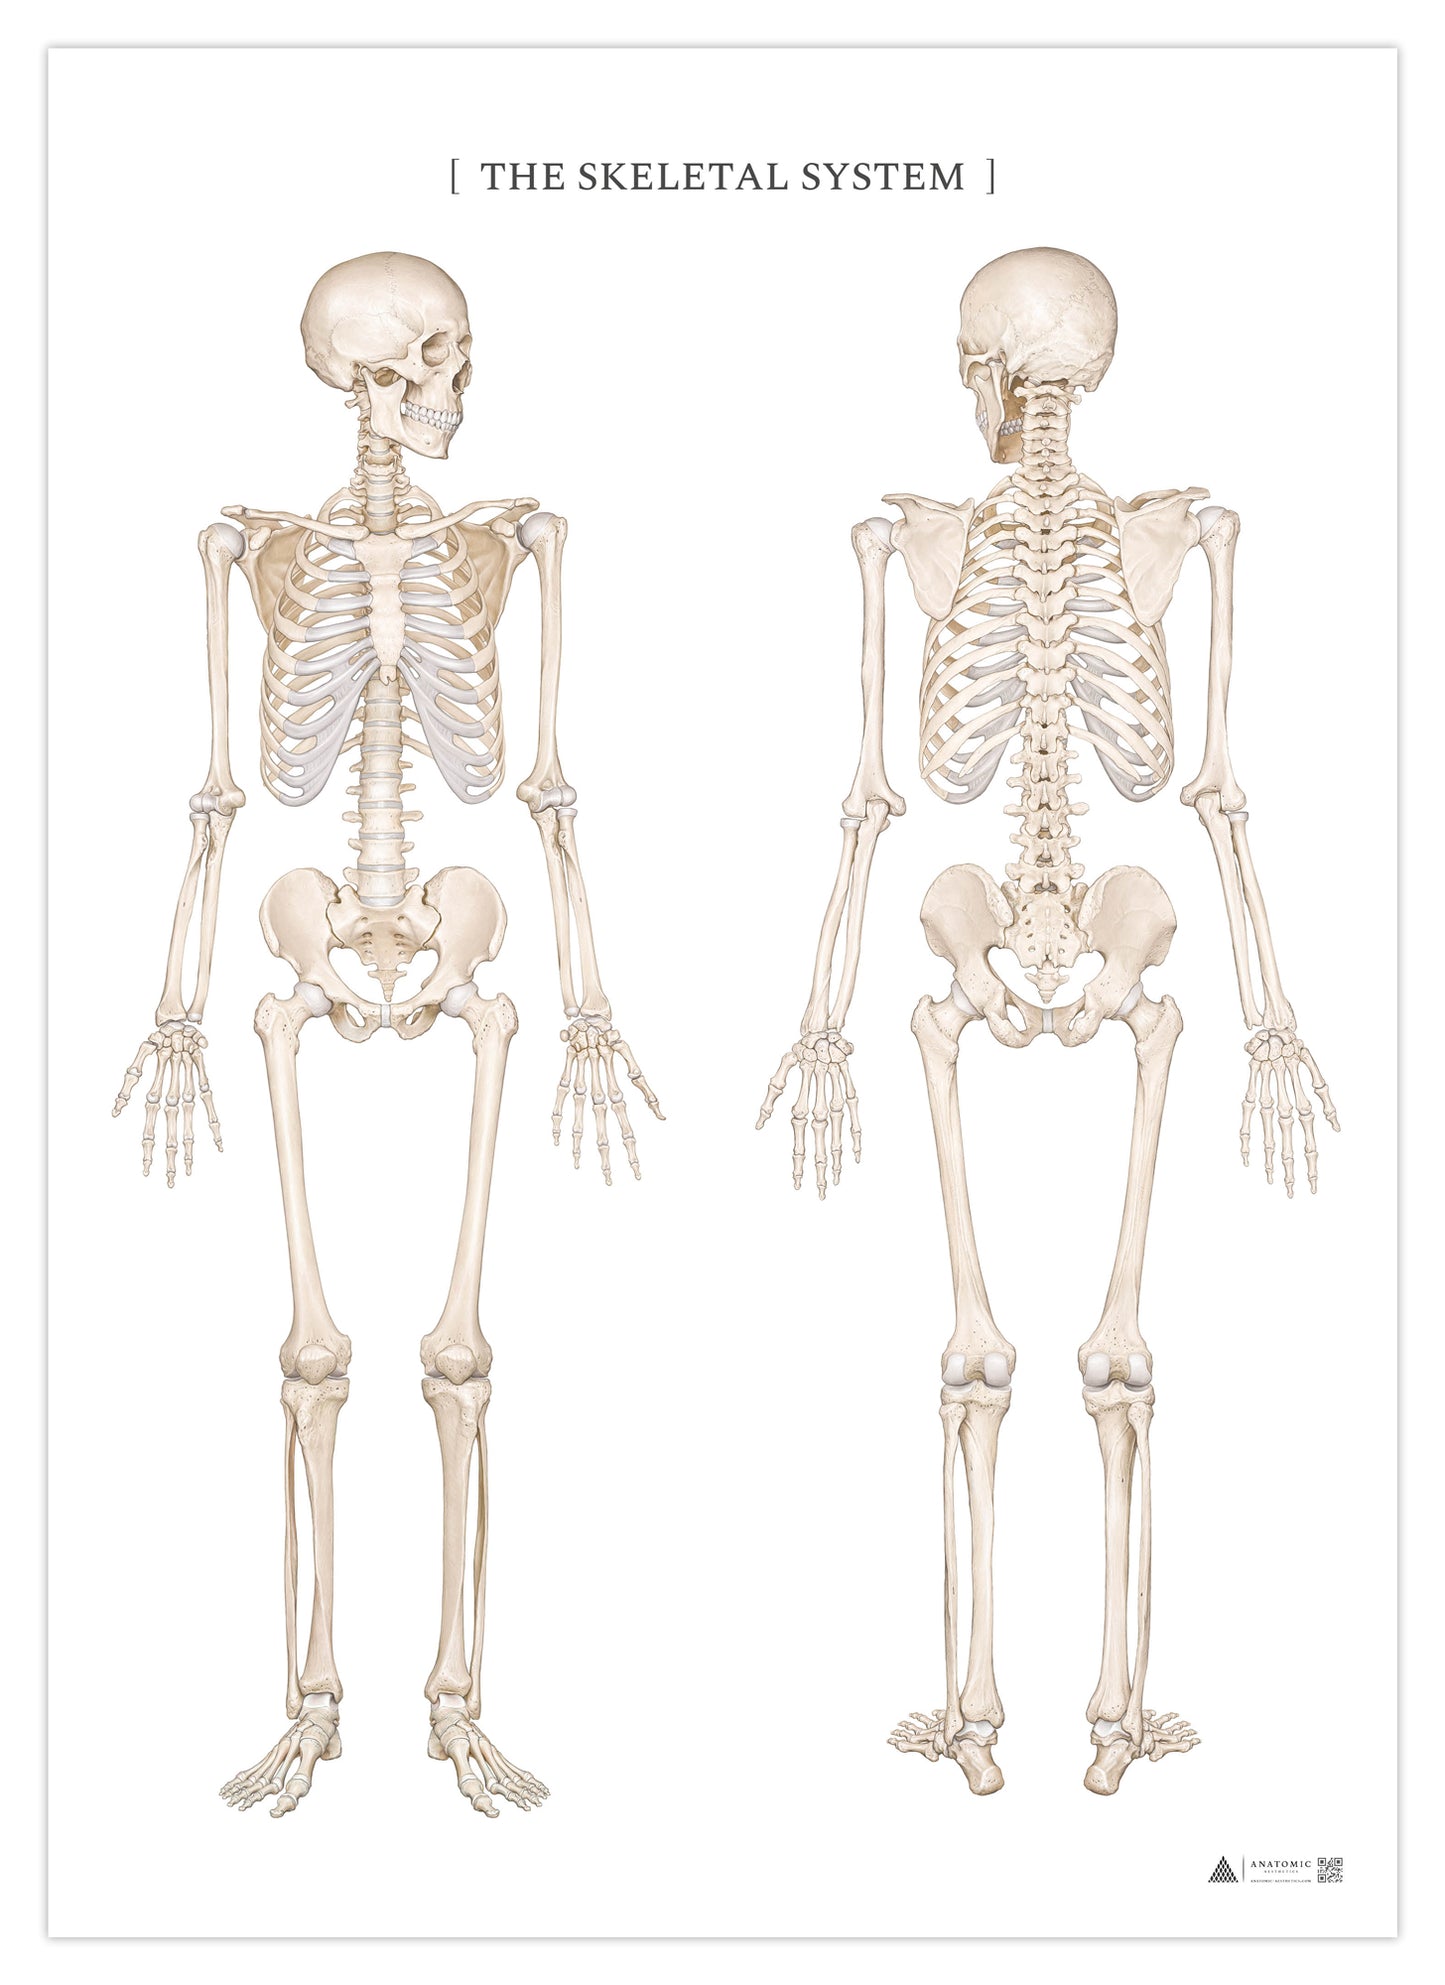 Anatomi plakat - Skeletsystemet